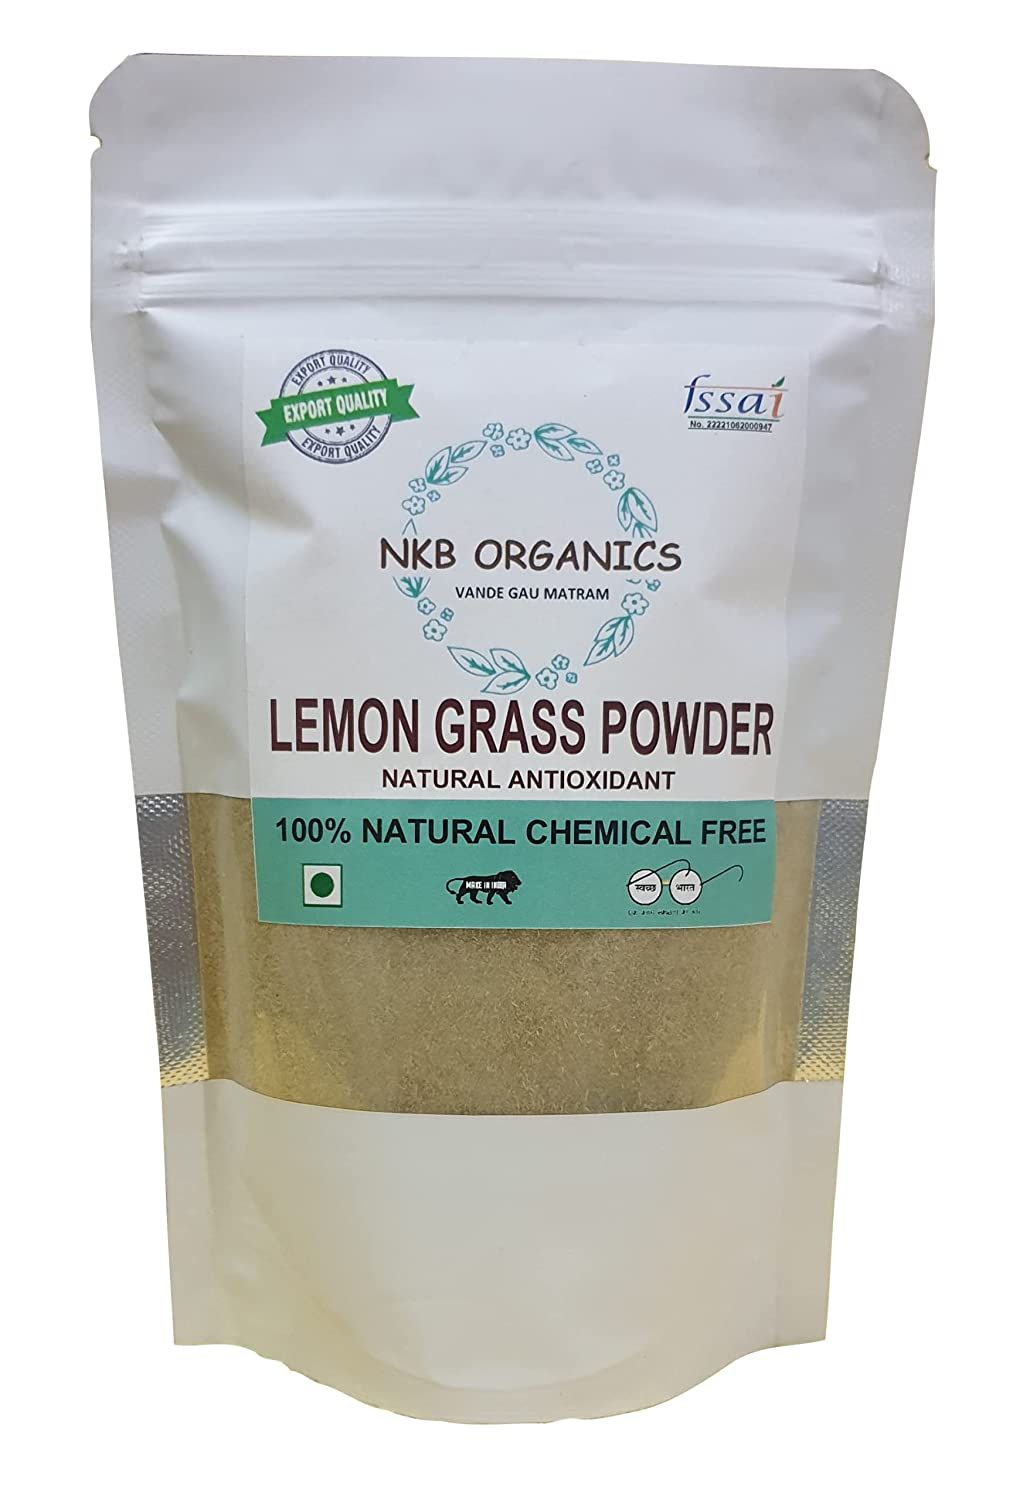 NKB Organics Lemon Grass Powder Image